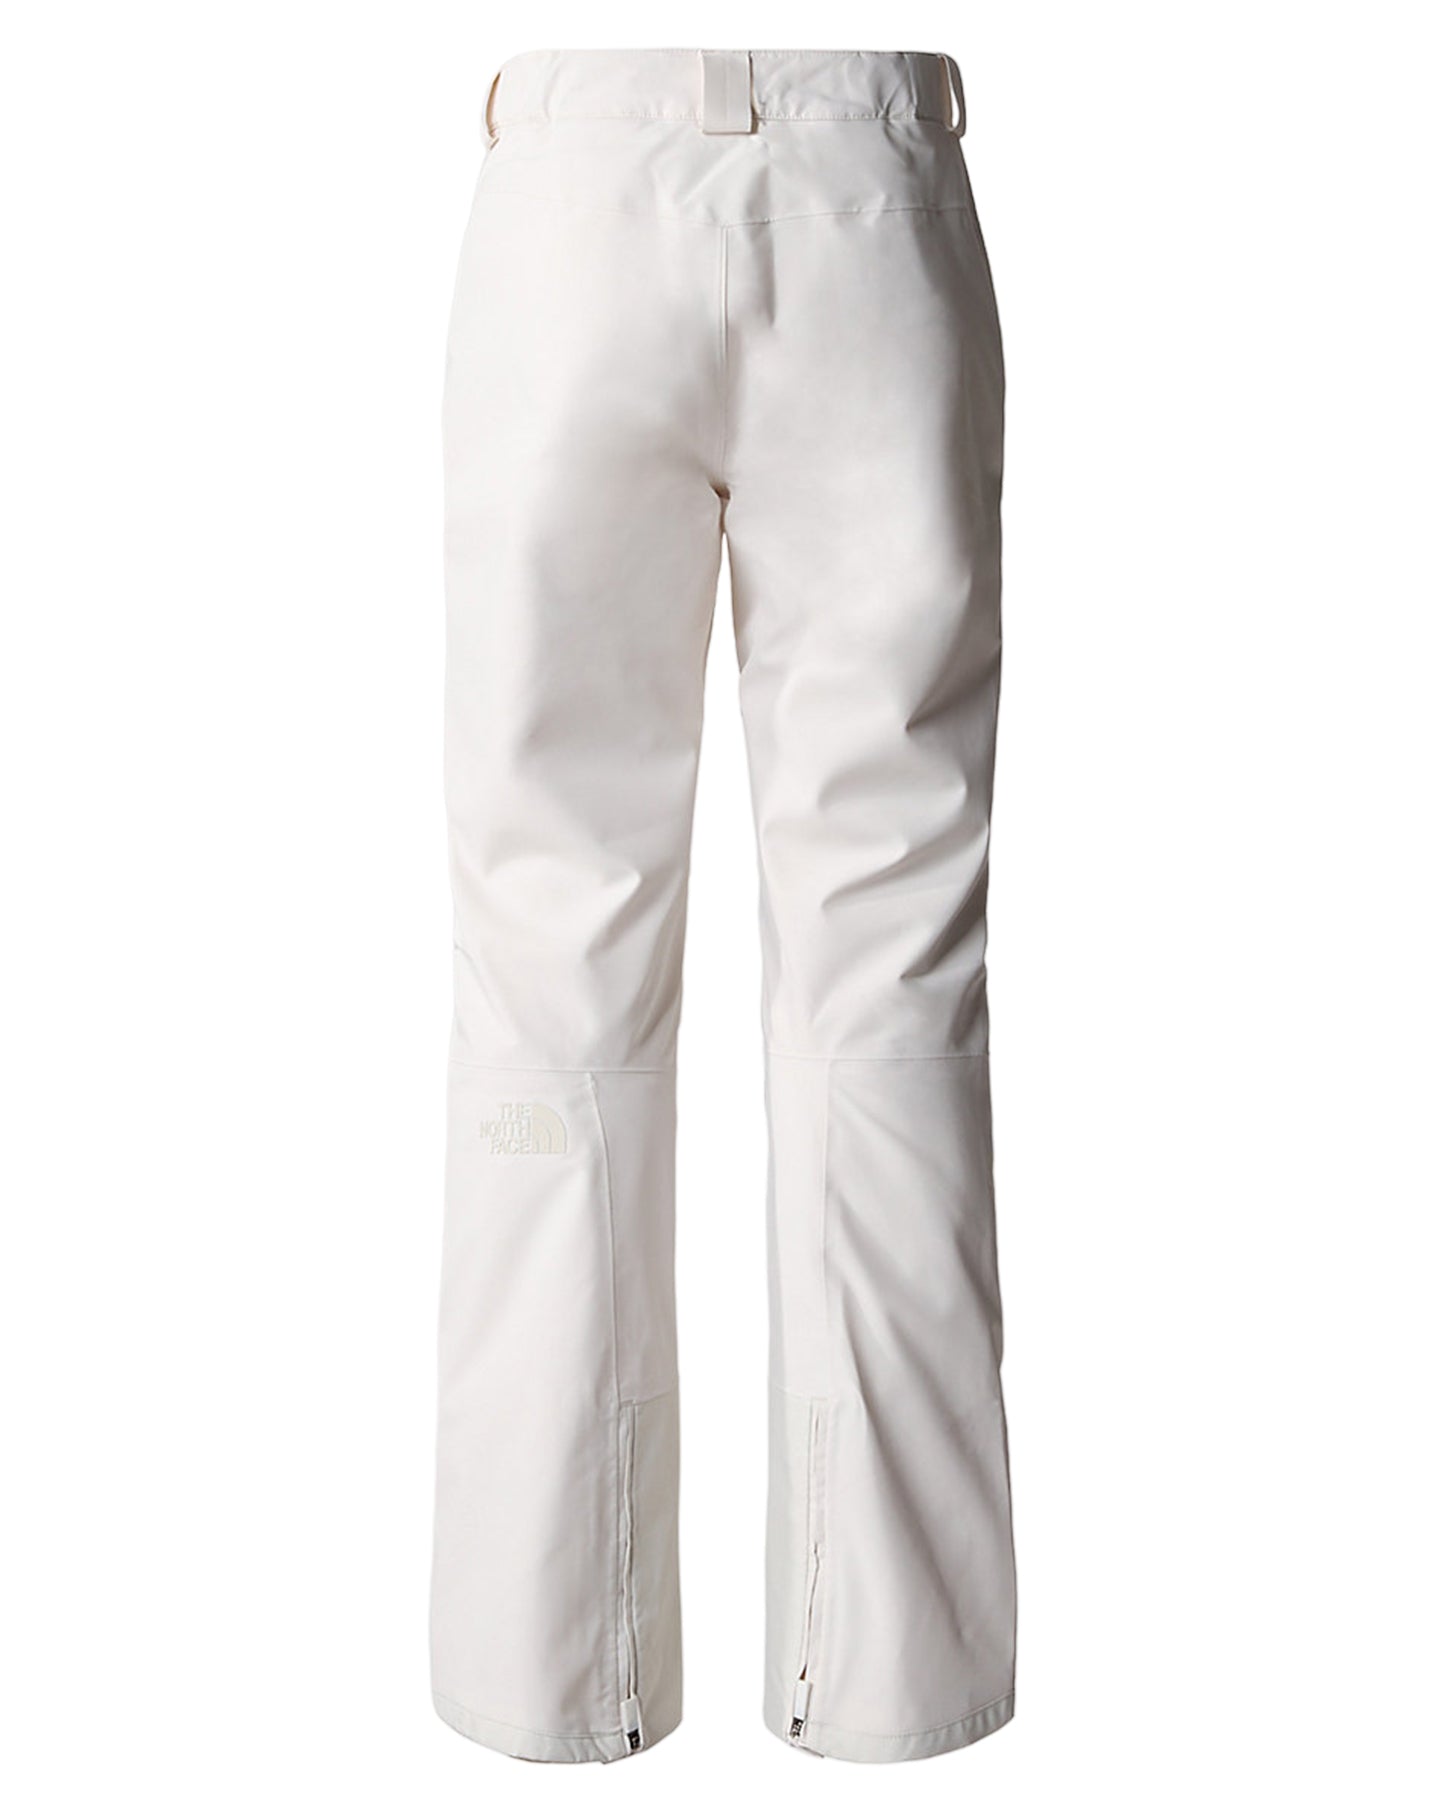 The North Face Women's Lenado Snow Pants - Gardenia White Women's Snow Pants - SnowSkiersWarehouse